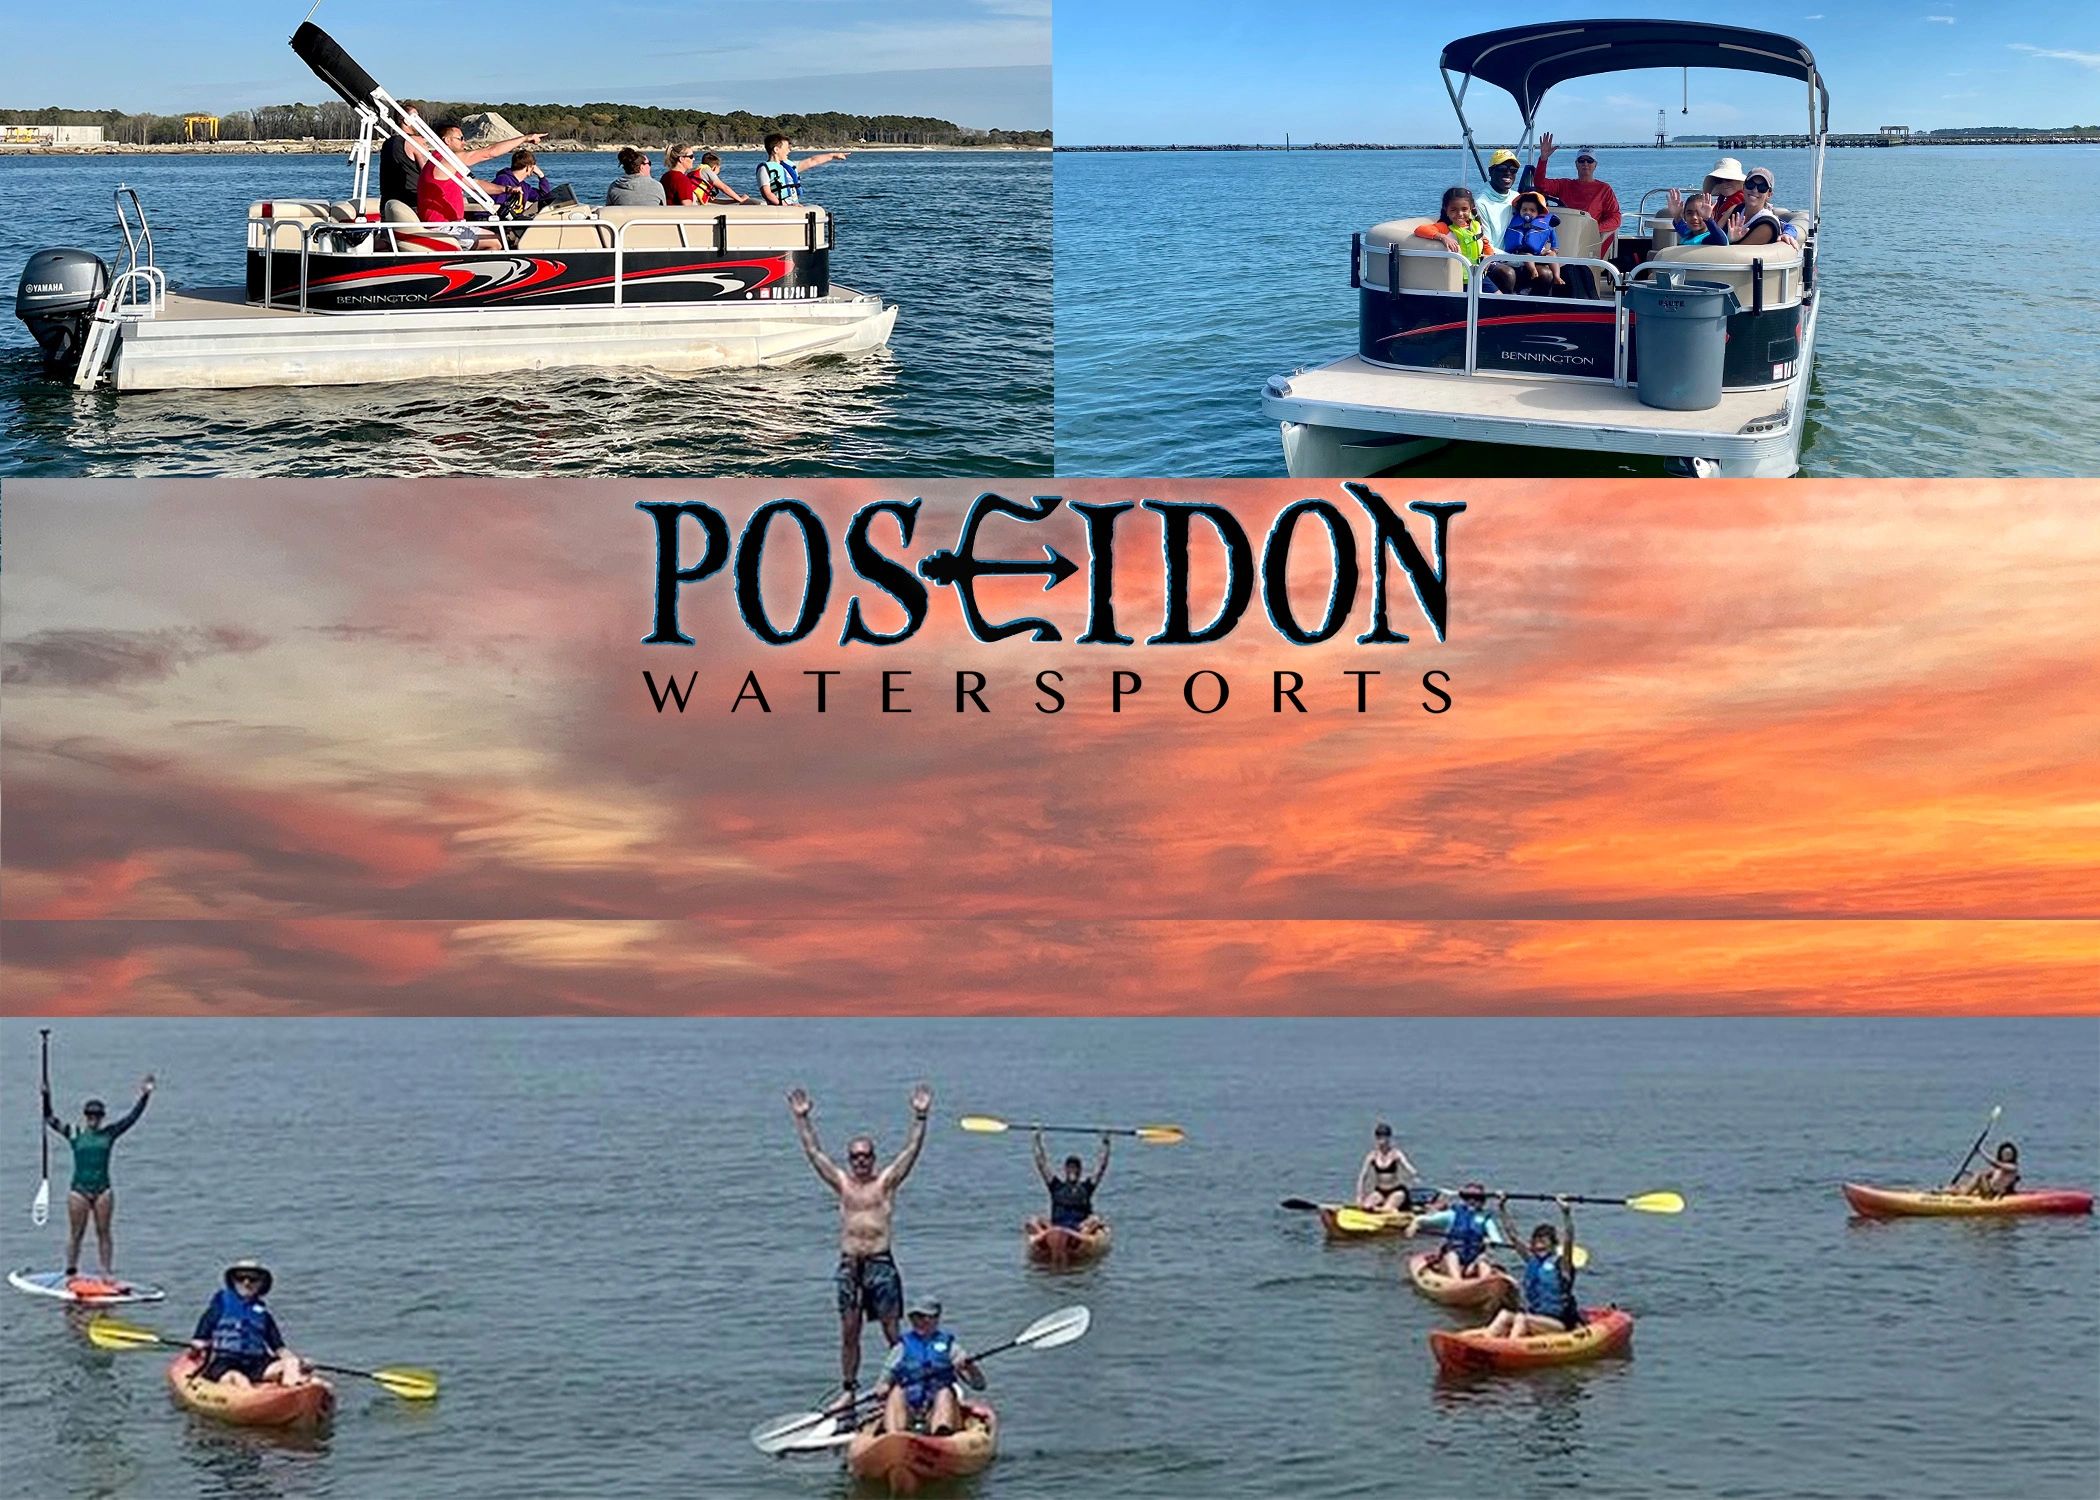 Poseidon Watersports Cape Charles Virginia. Boat rentals, bike rentals, kayak & paddleboard rentals